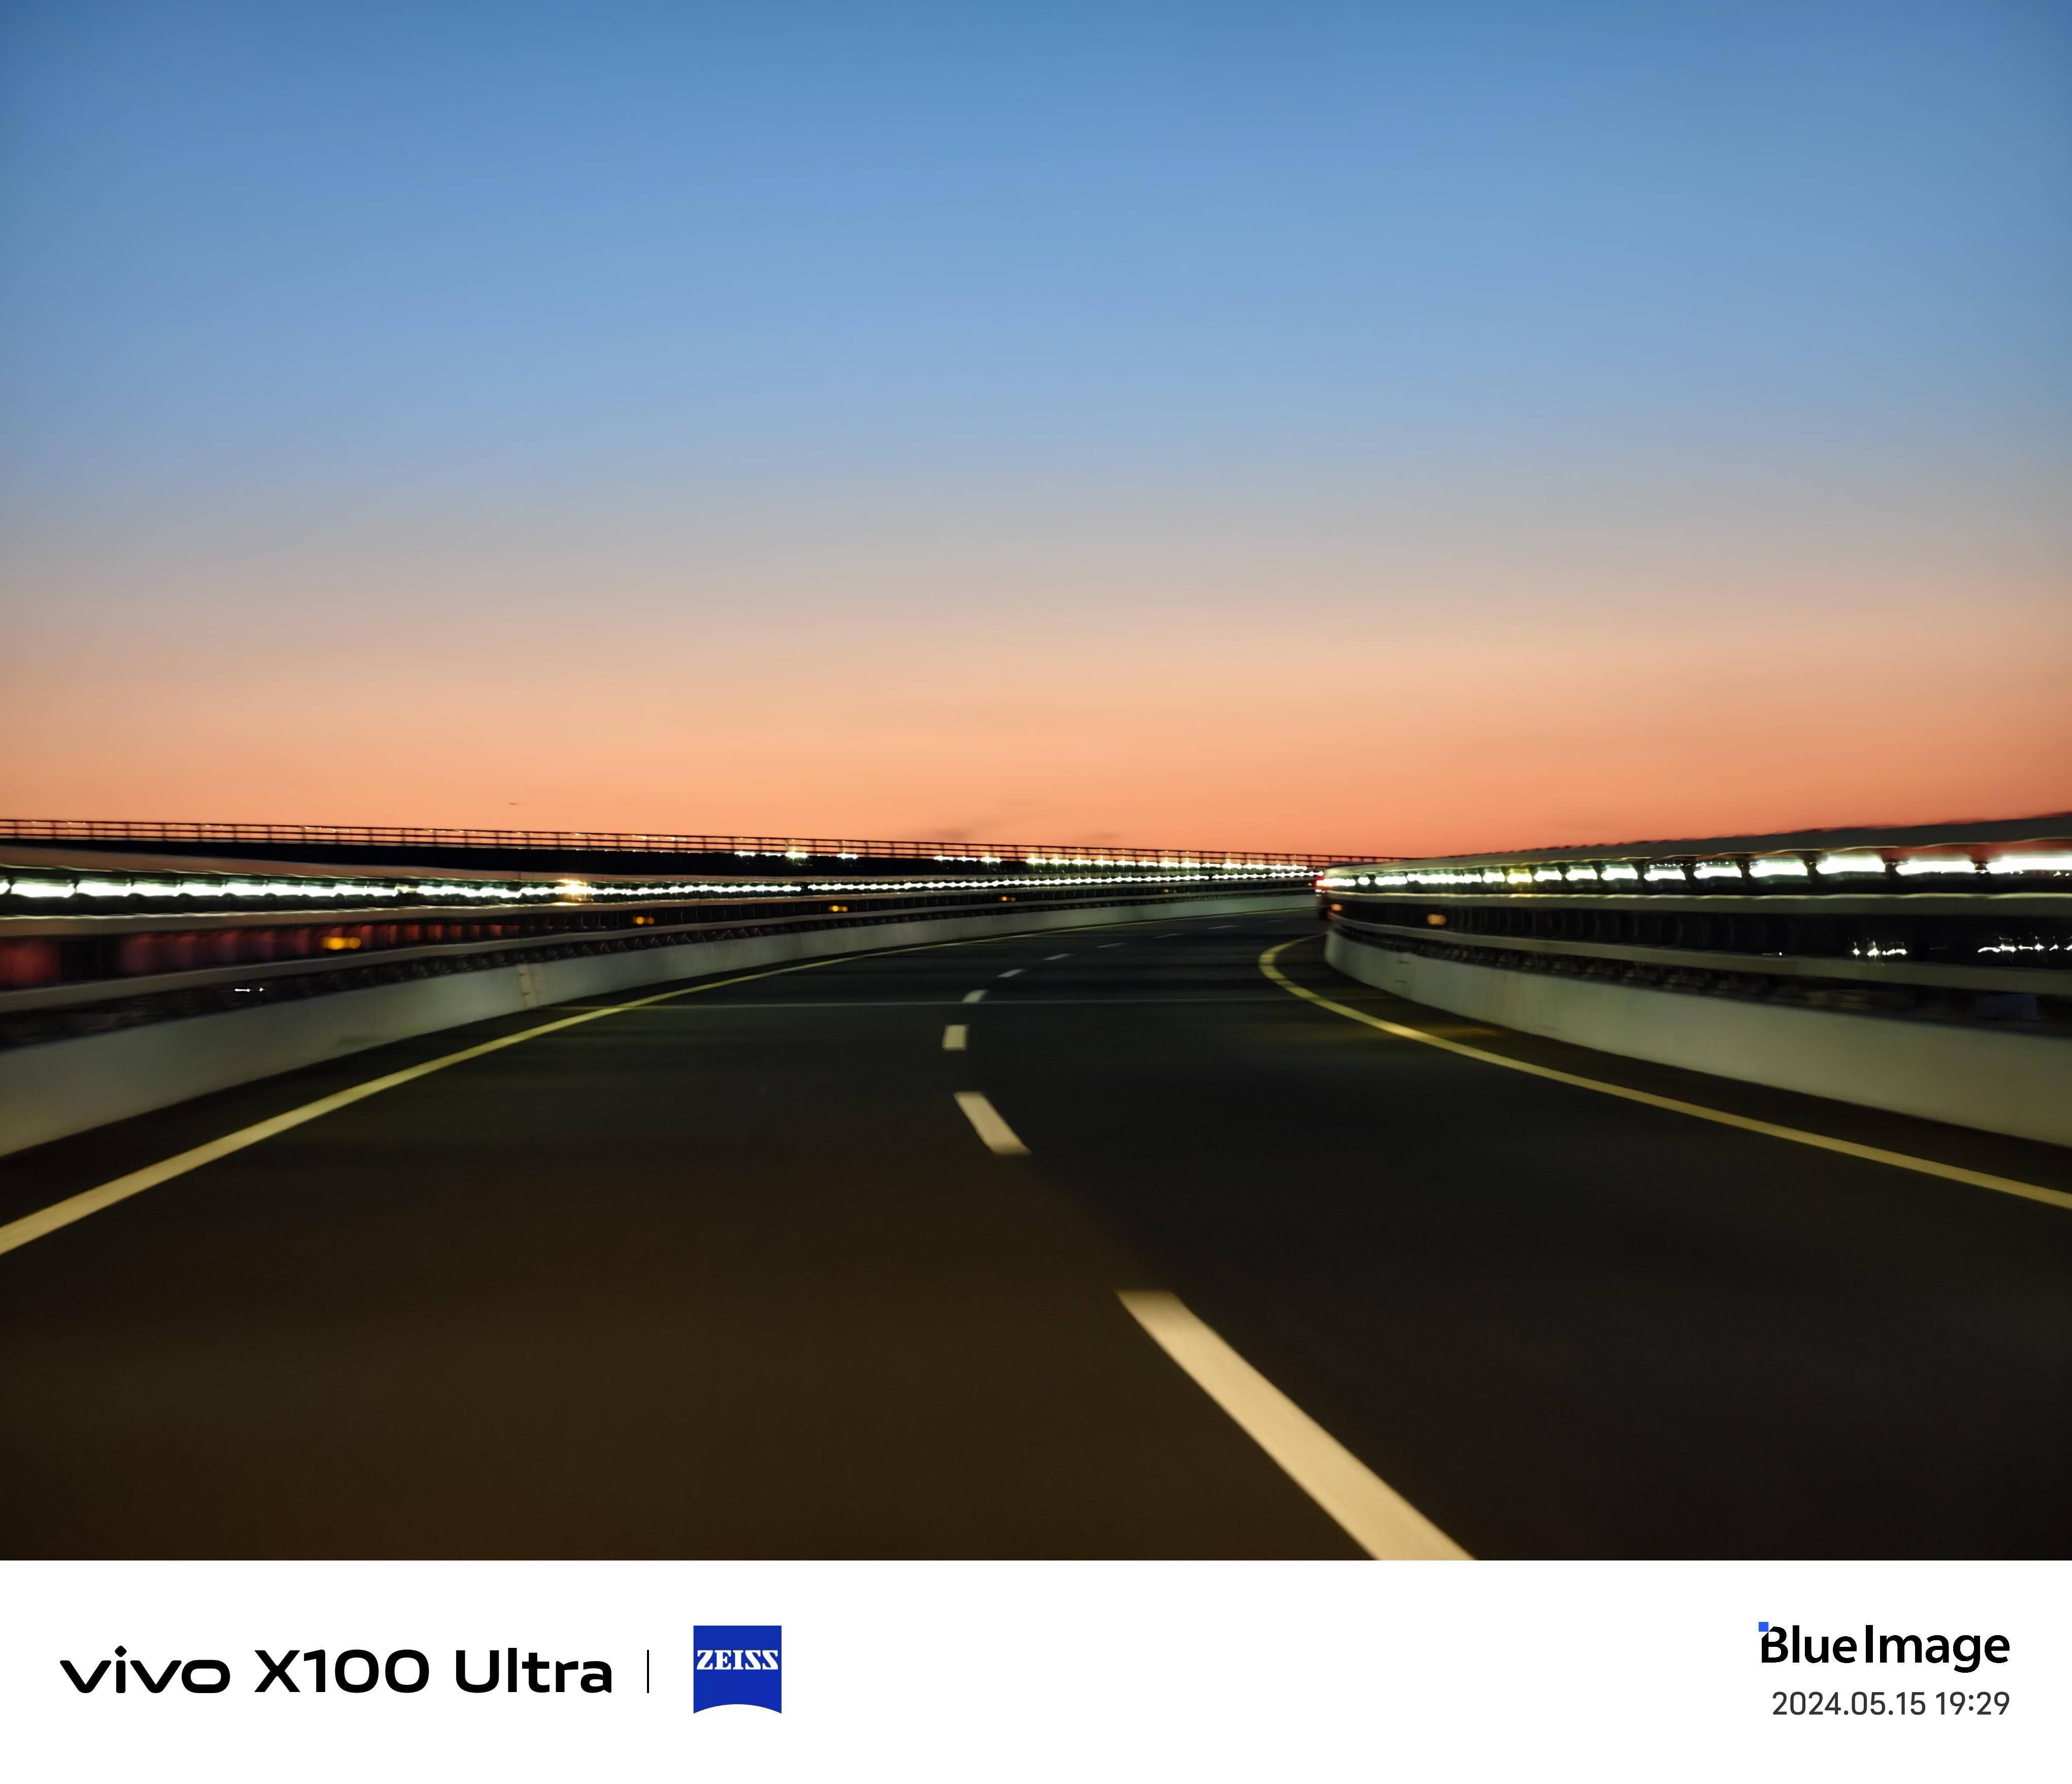 vivo x100 ultra 首发评测:移动影像的王,长焦体验一骑绝尘